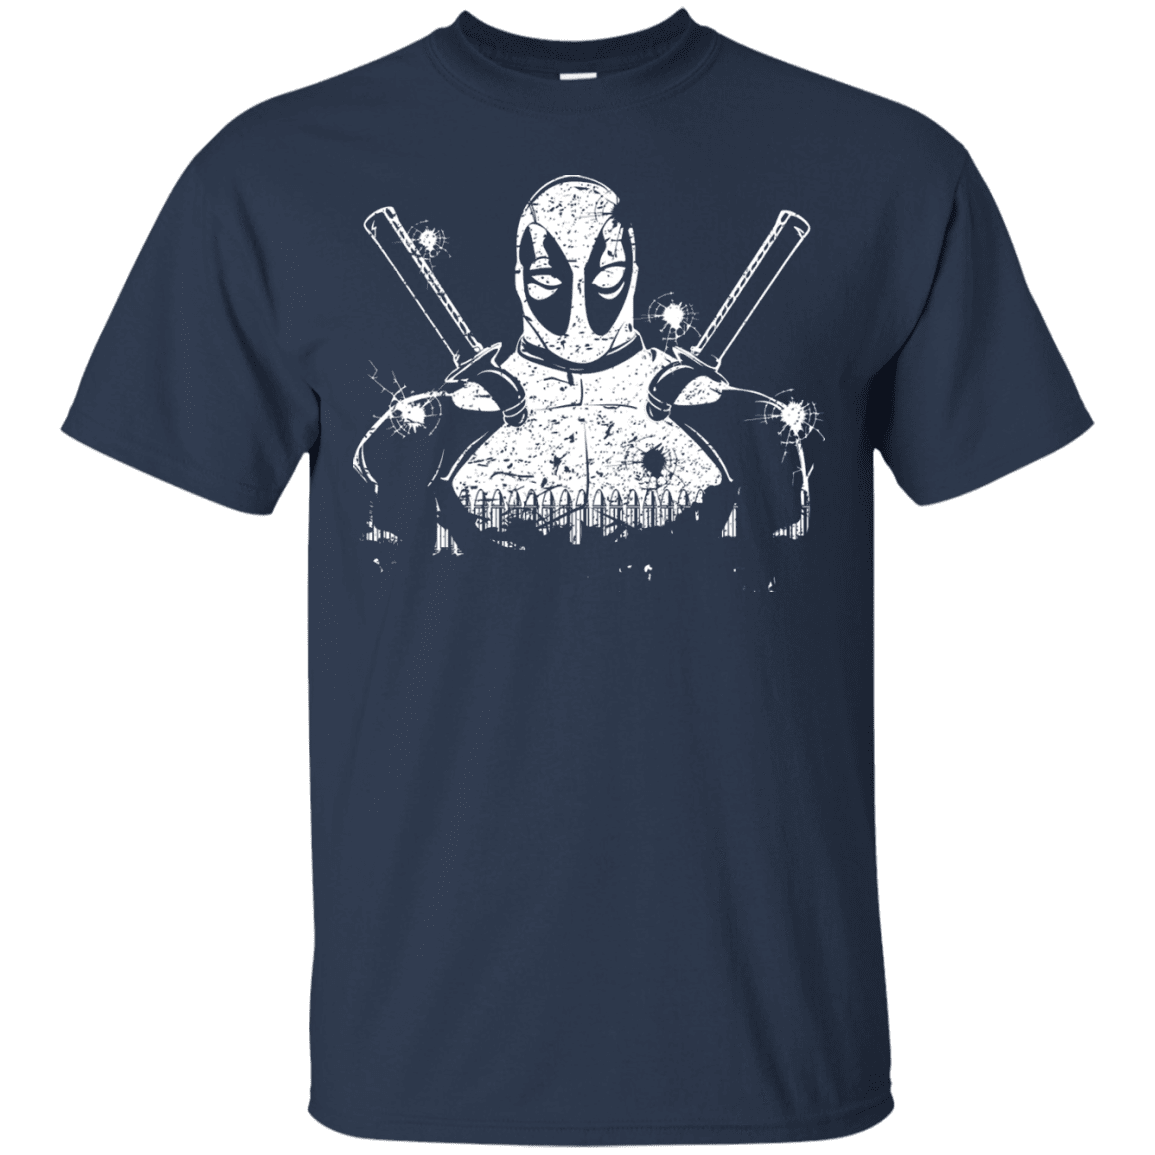 T-Shirts Navy / S Shadow of Mercenary T-Shirt